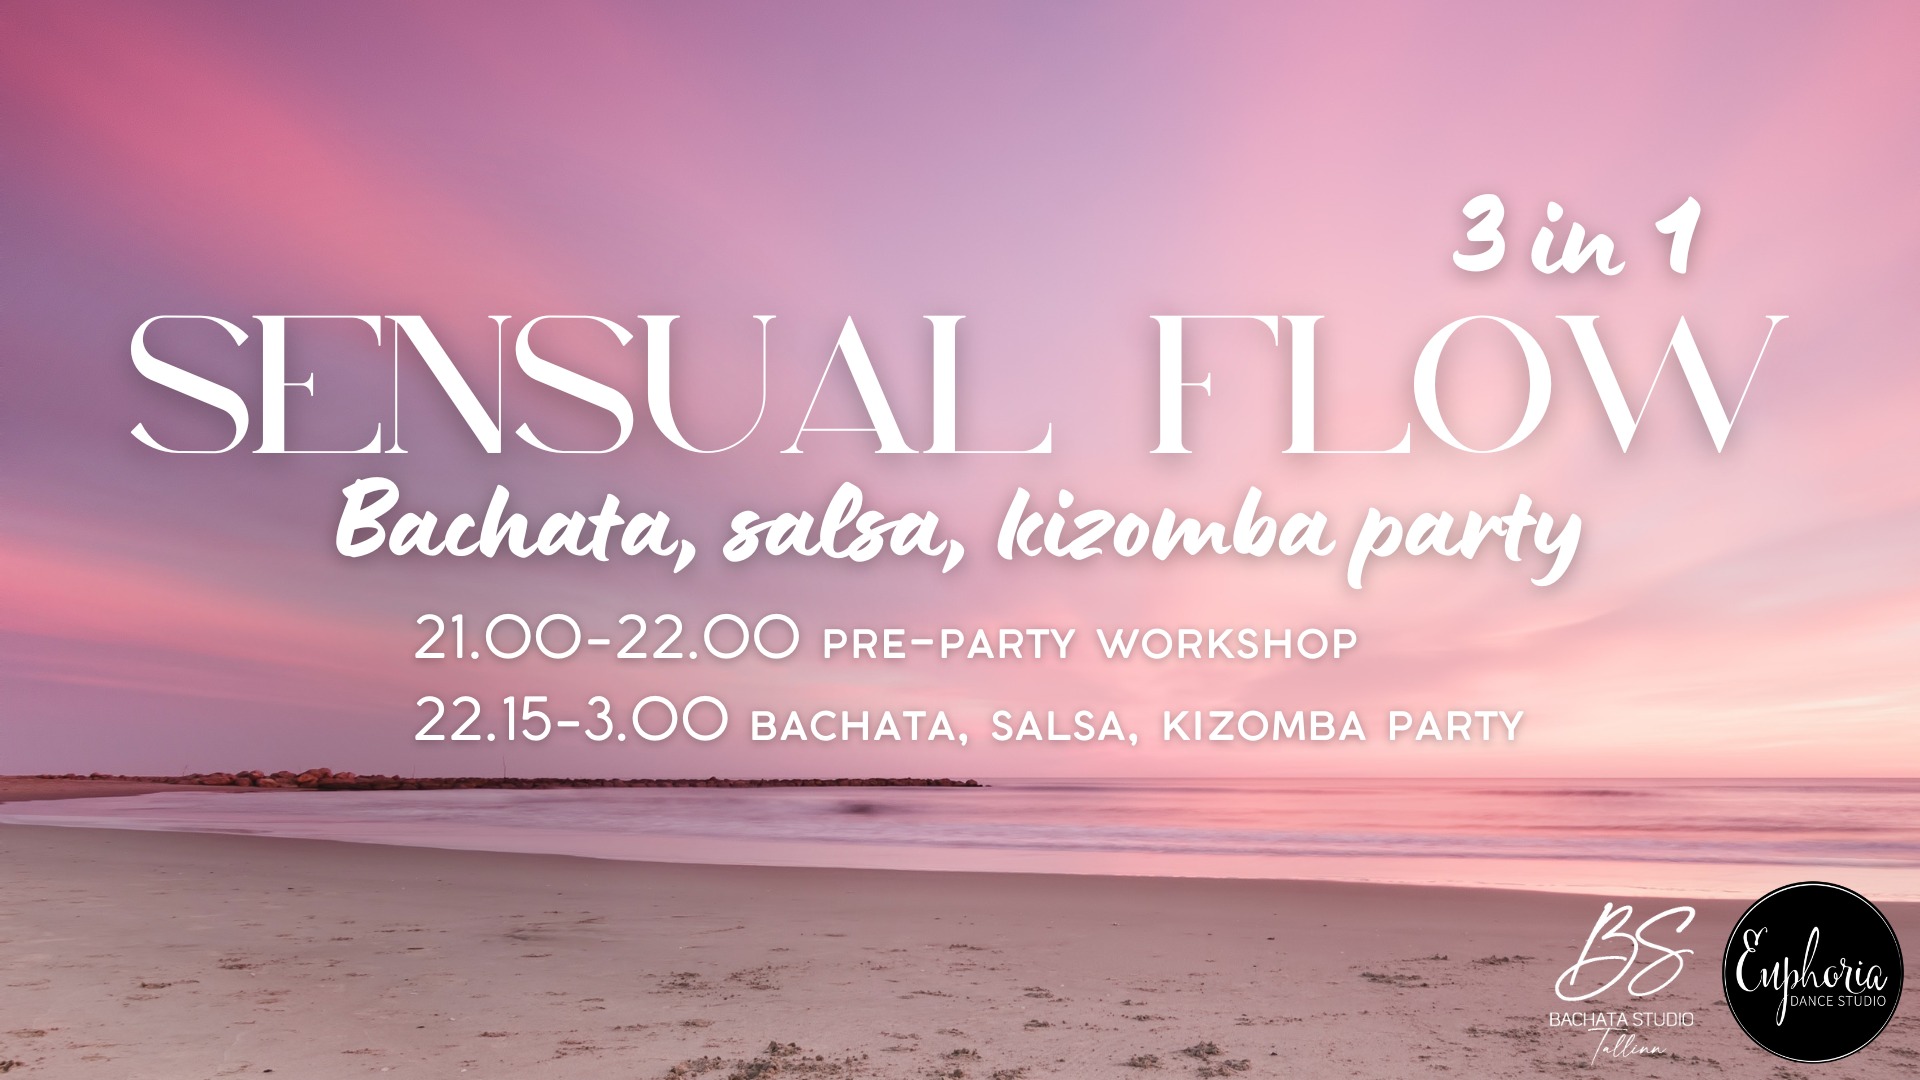 Sensual Flow 3in1: Bachata-Salsa-Kizomba Party in 3 rooms